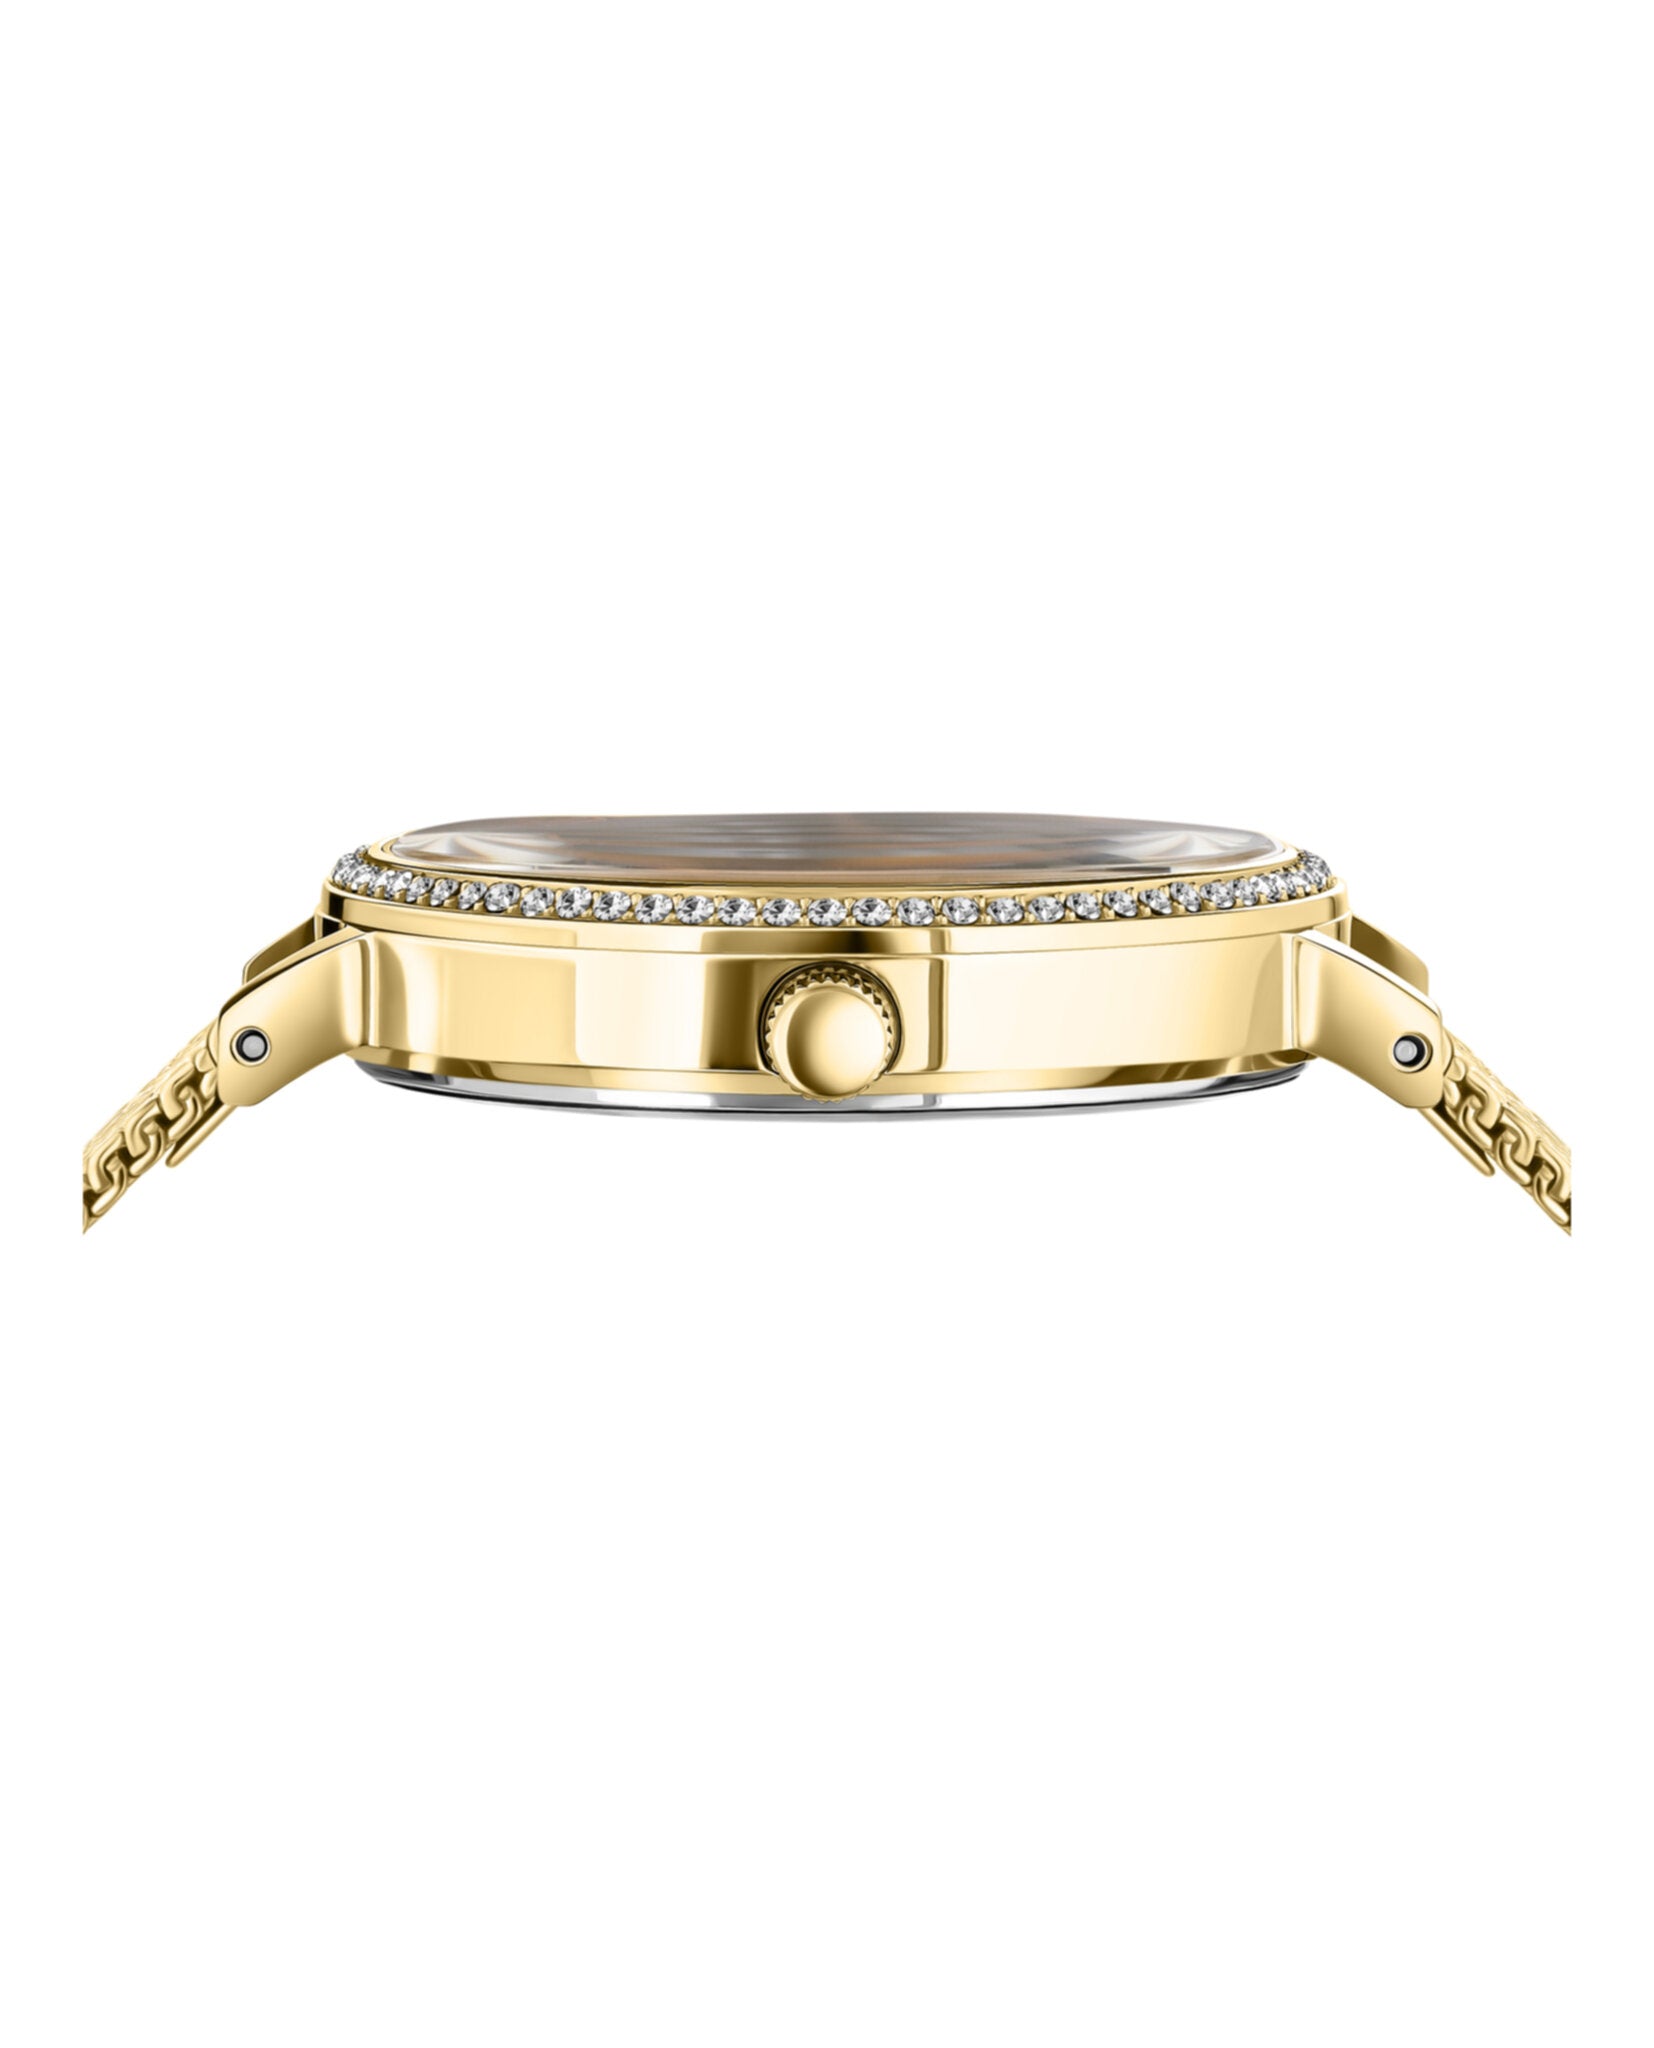 Mar Vista Crystal Bracelet Watch